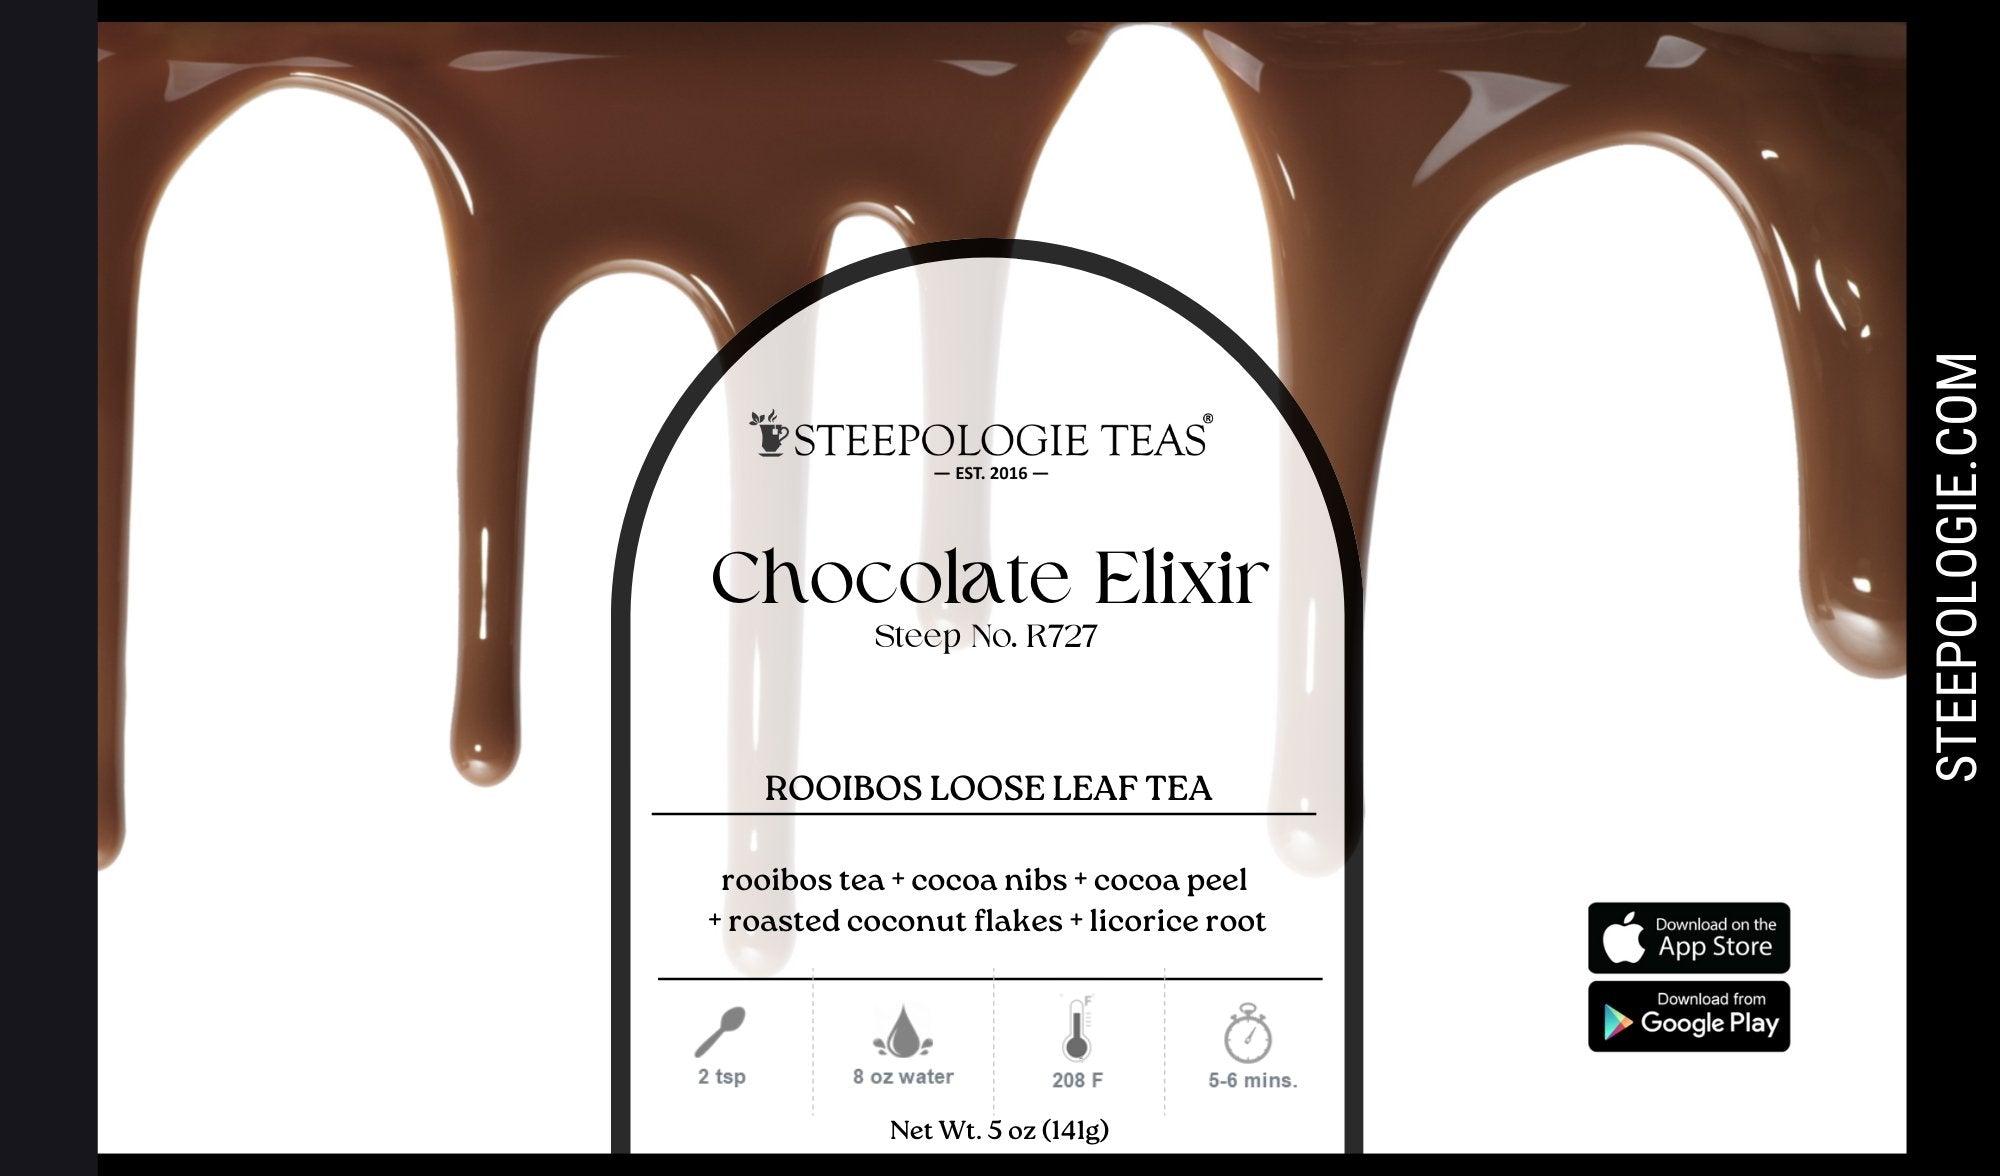 Chocolate Elixir Tea (Steep No. R727) - Steepologie